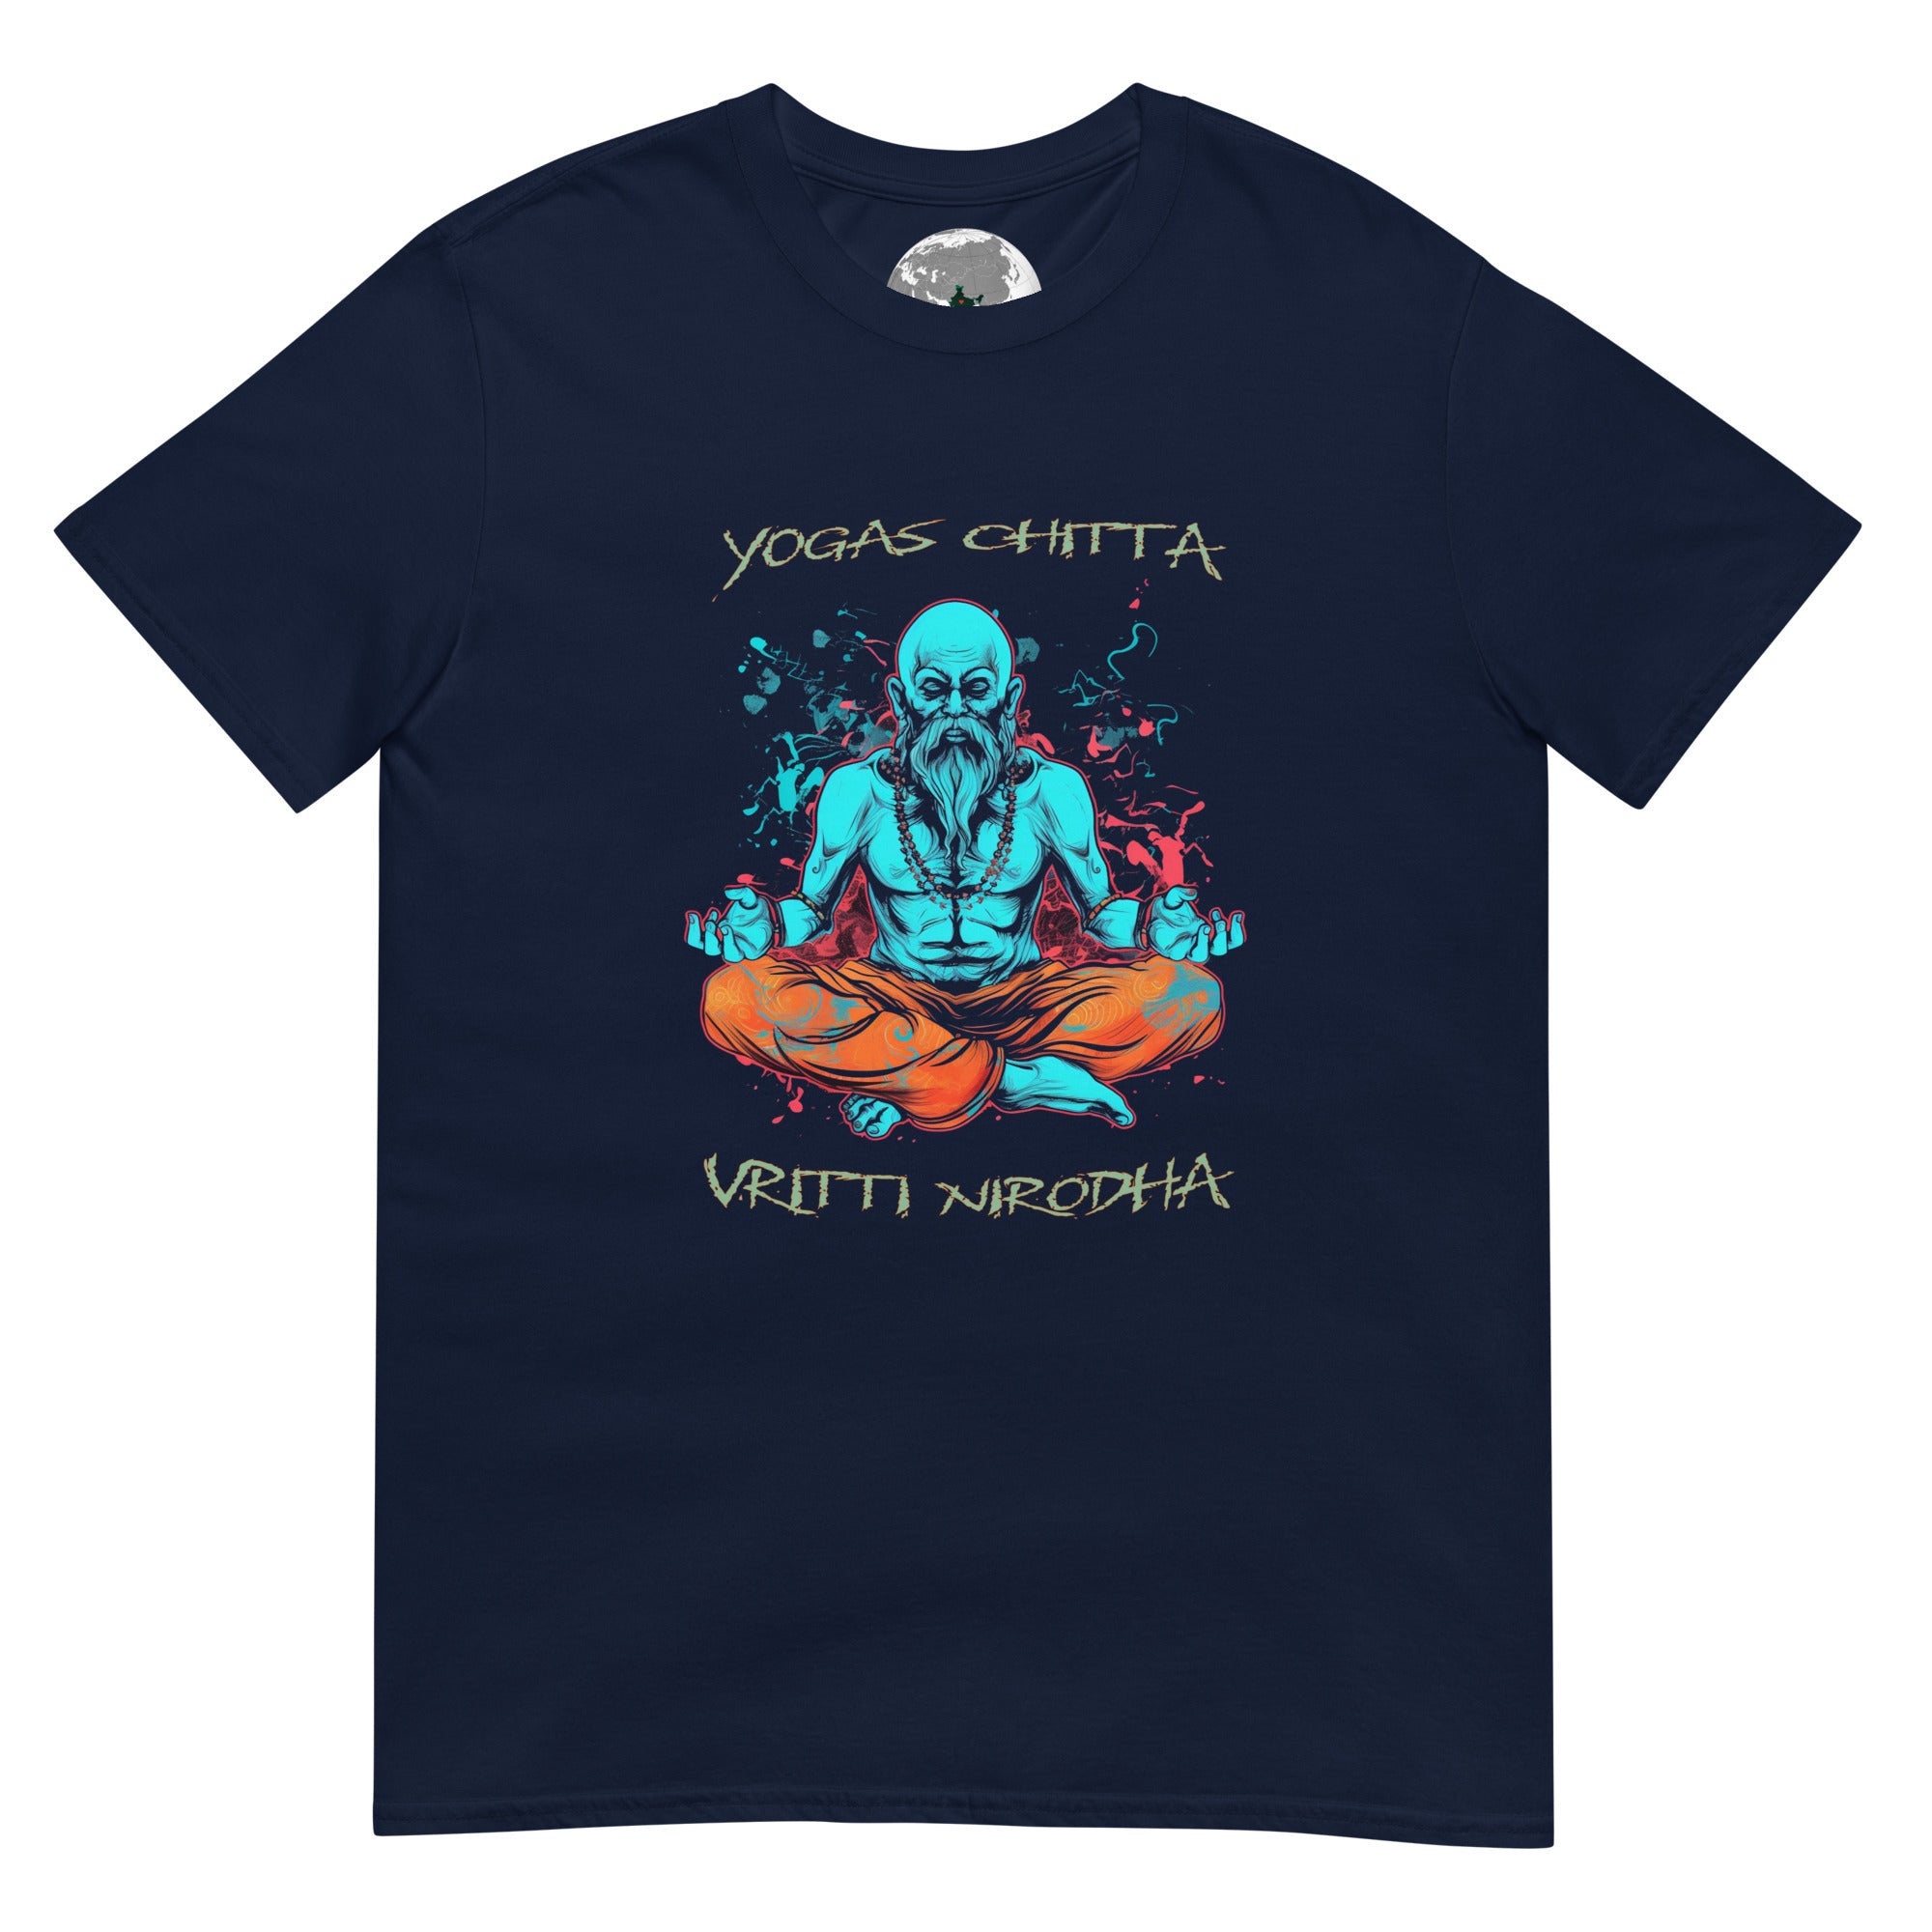 Patanjali's "Yoga Chitta..." Short-Sleeve Unisex T-Shirt